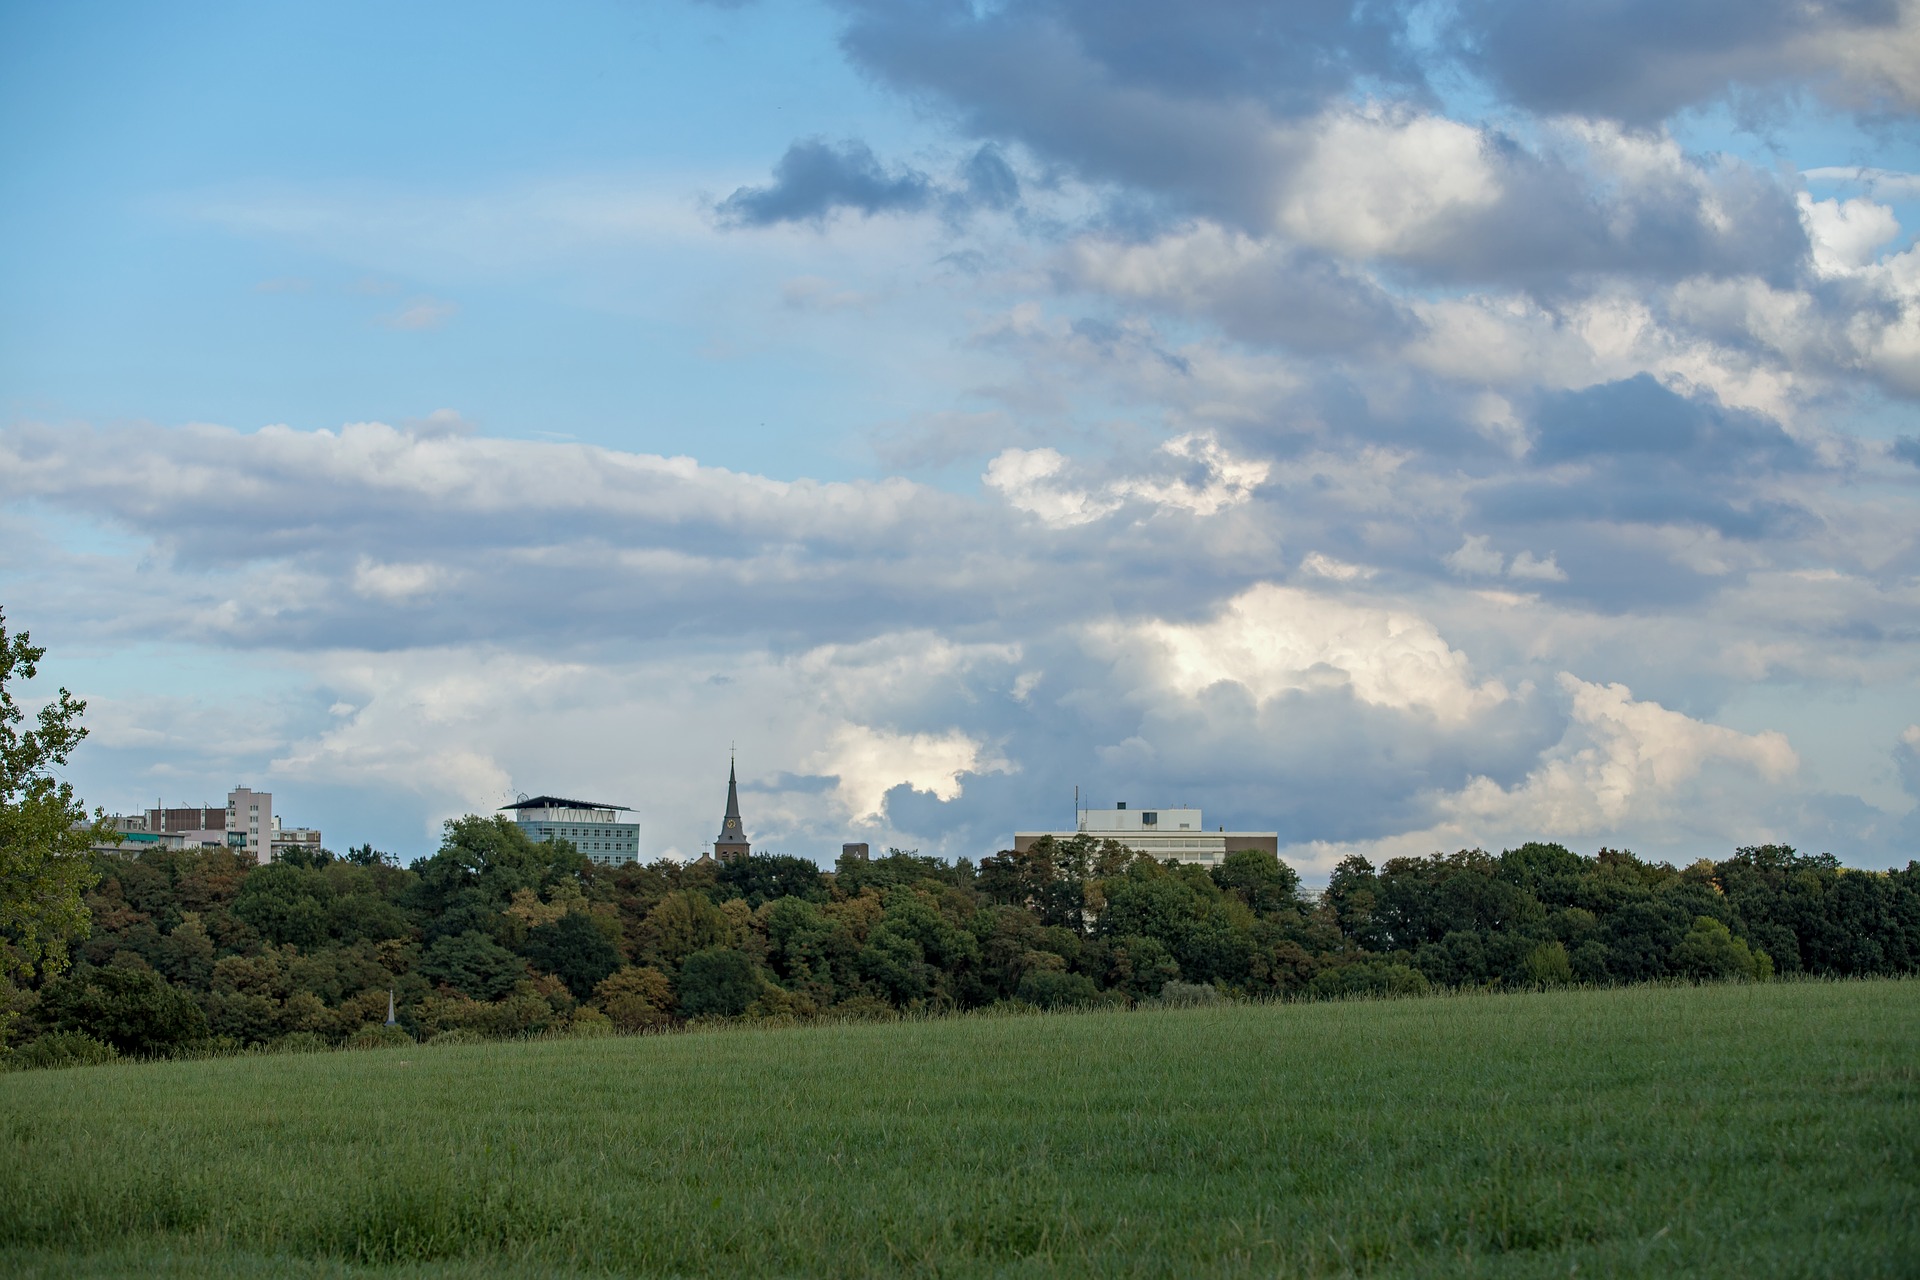 A panorama of Kerkrade's skyline on a cloudy day